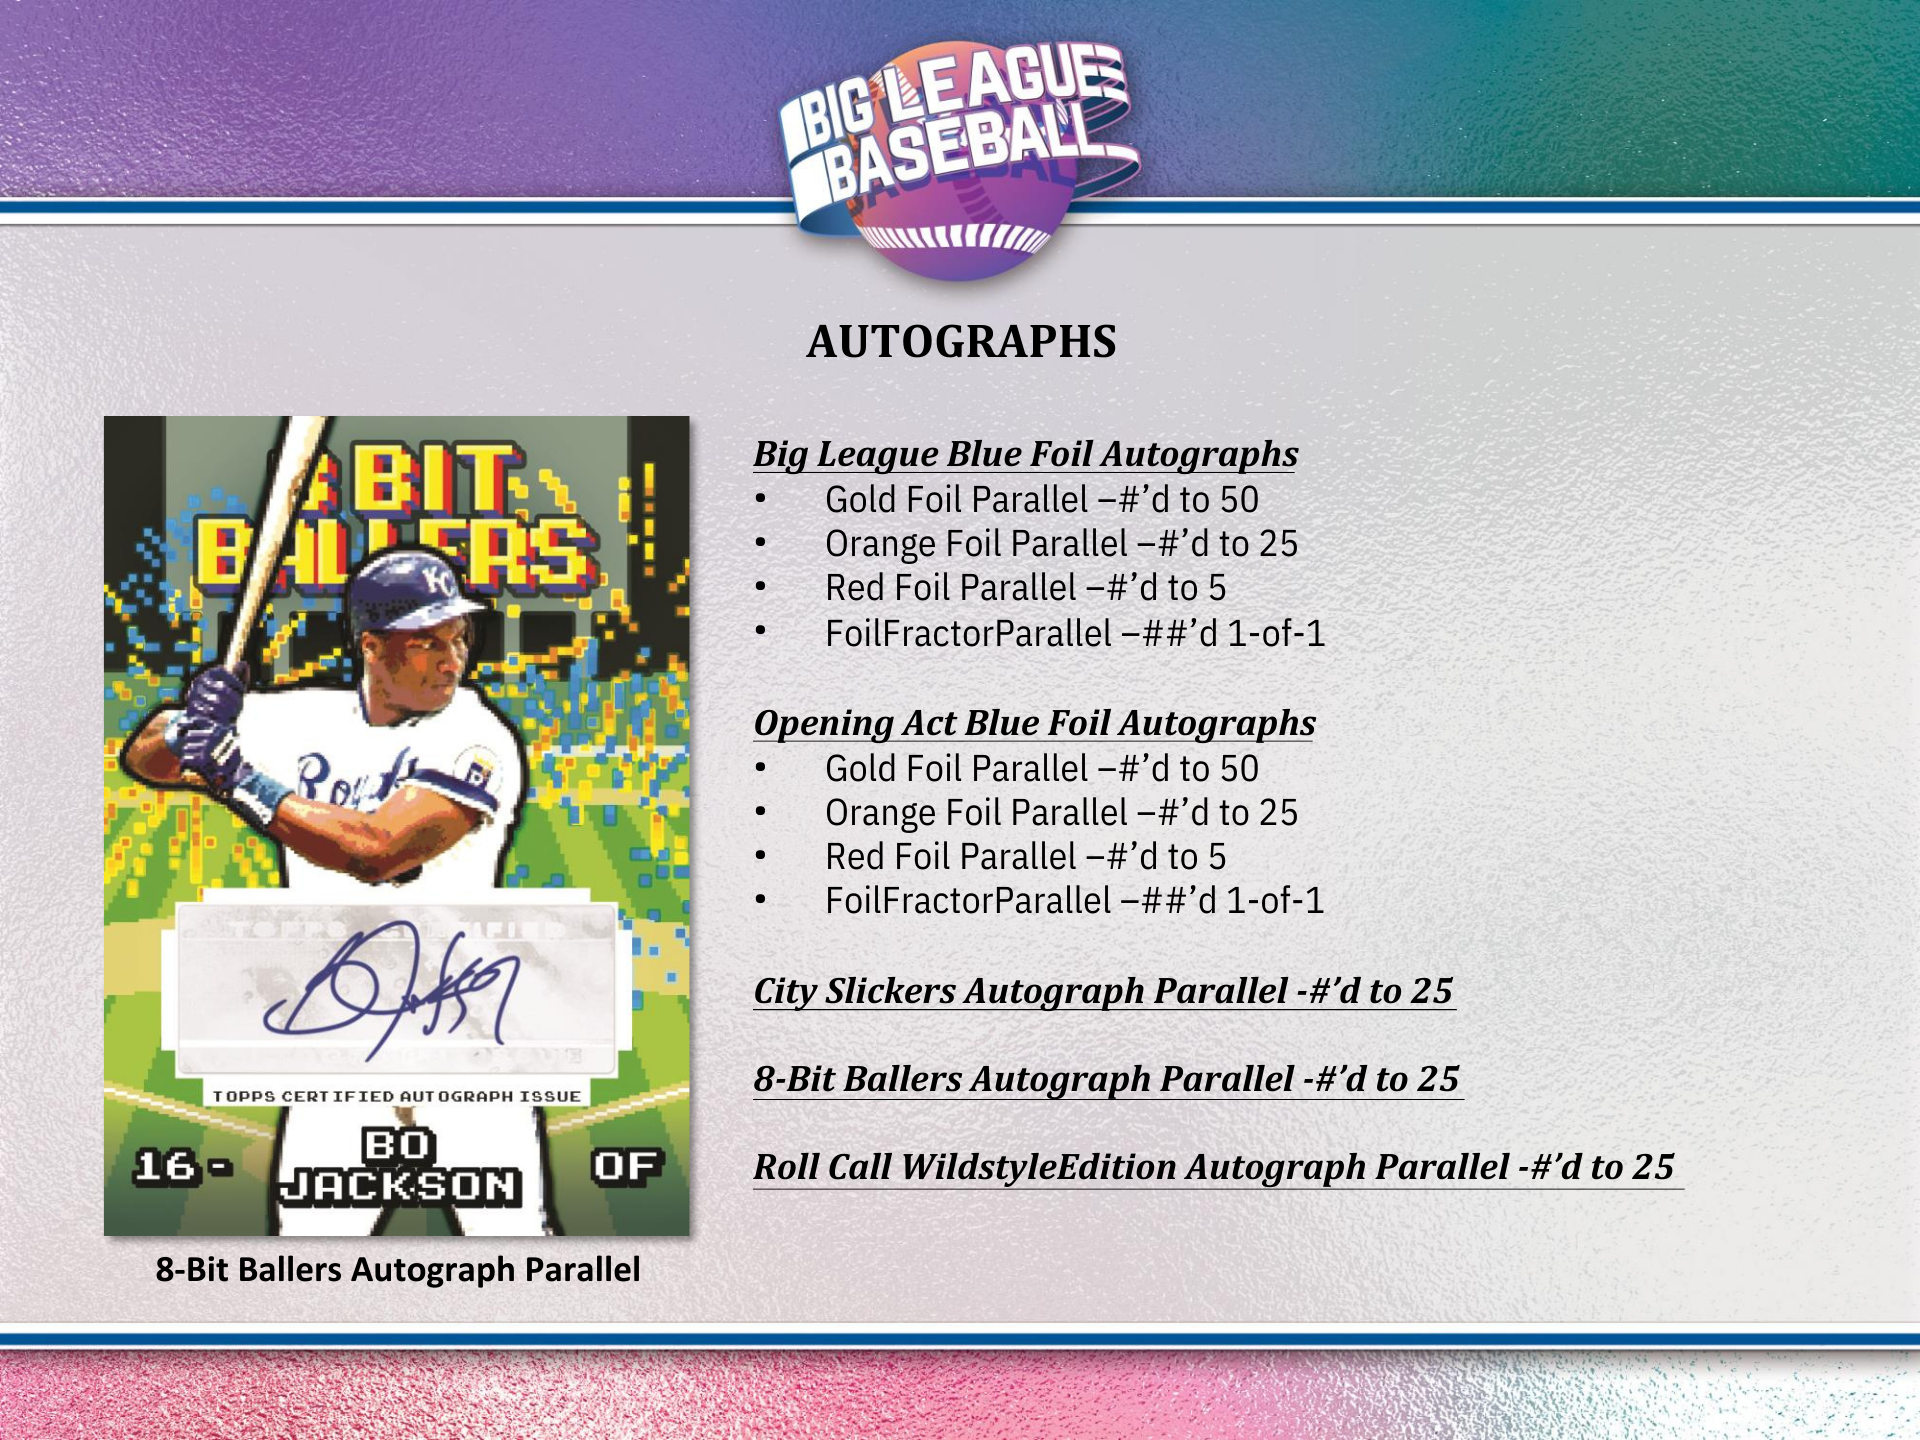 Sonny Gray 2023 Major League Baseball All-Star Game Autographed